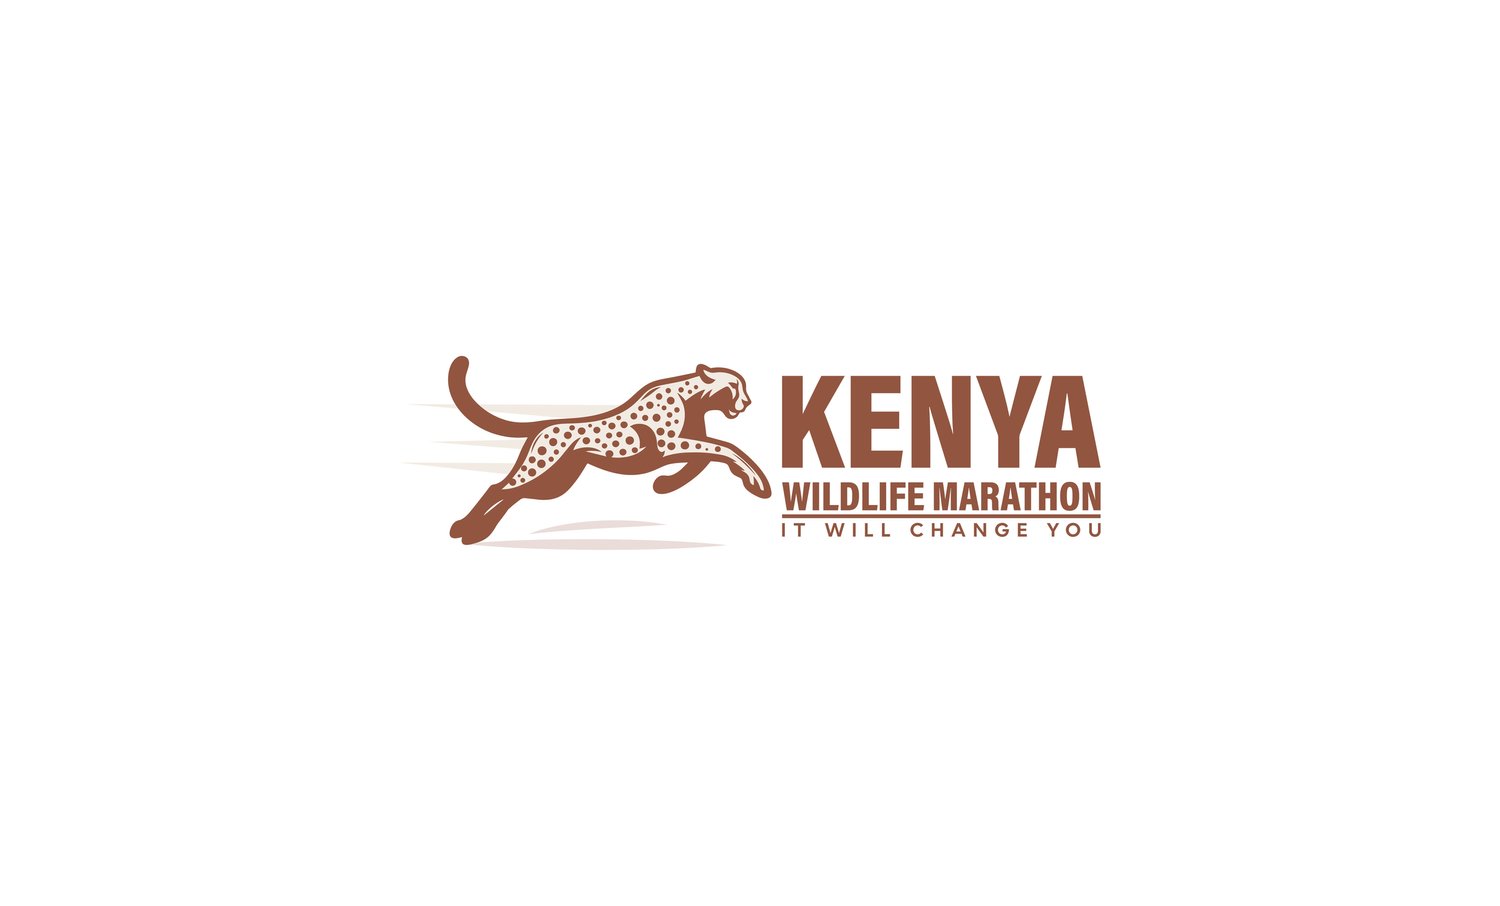 Kenya Wildlife Marathon